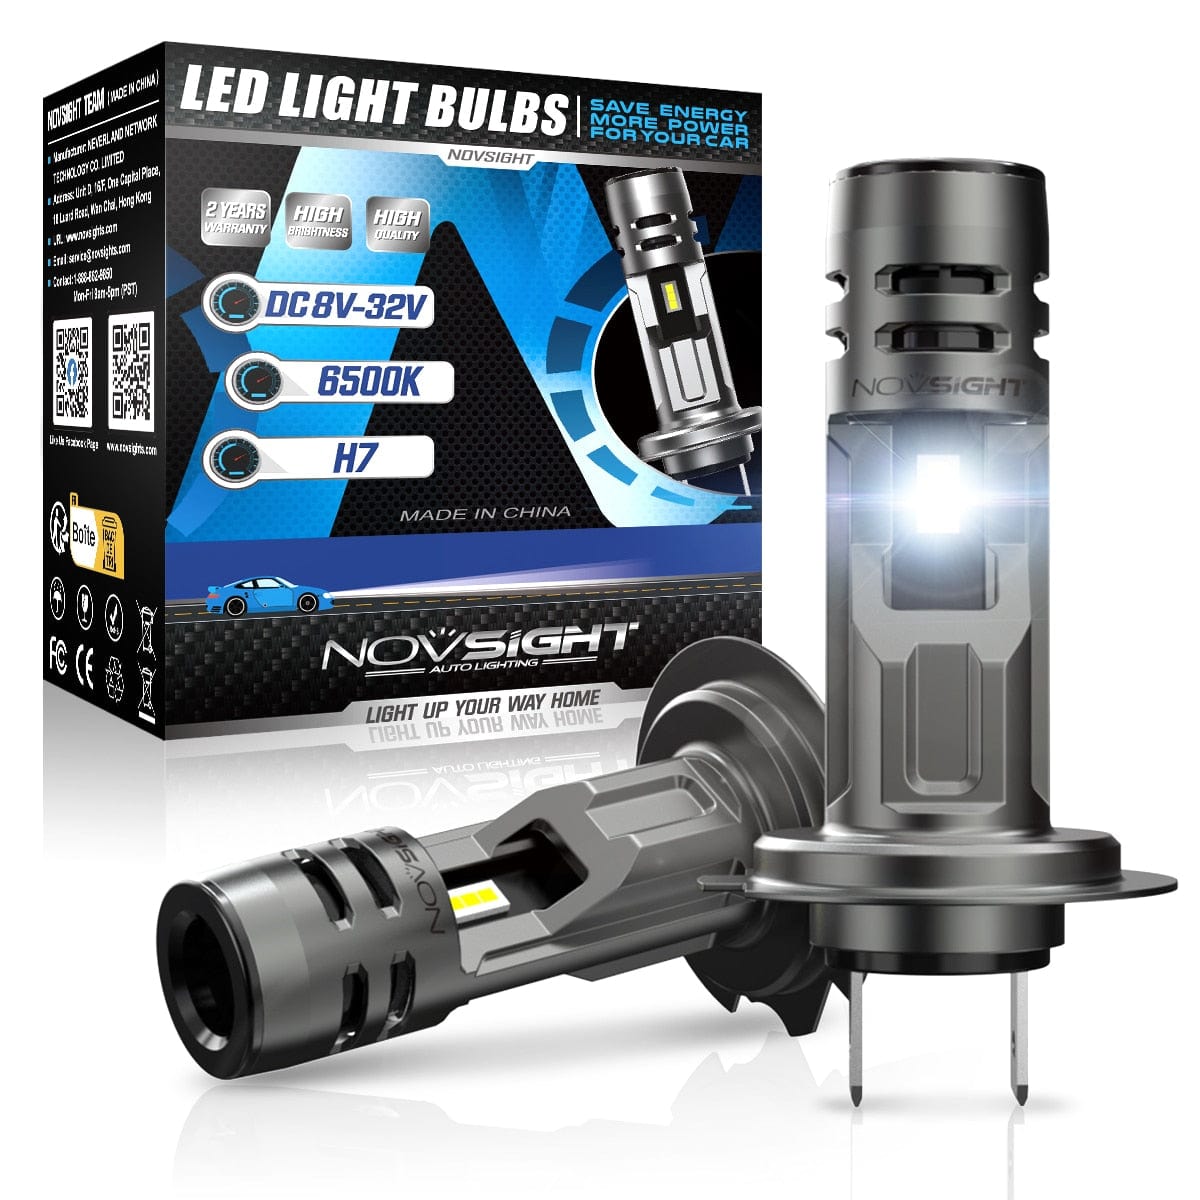 Revolight NOVSIGHT N58 H7 LED Headlight 1:1 Mini Size Headlamp 60W 12000LM 6500K Car Lamps Super Bright Plug and Play Car Headlight Bulbs